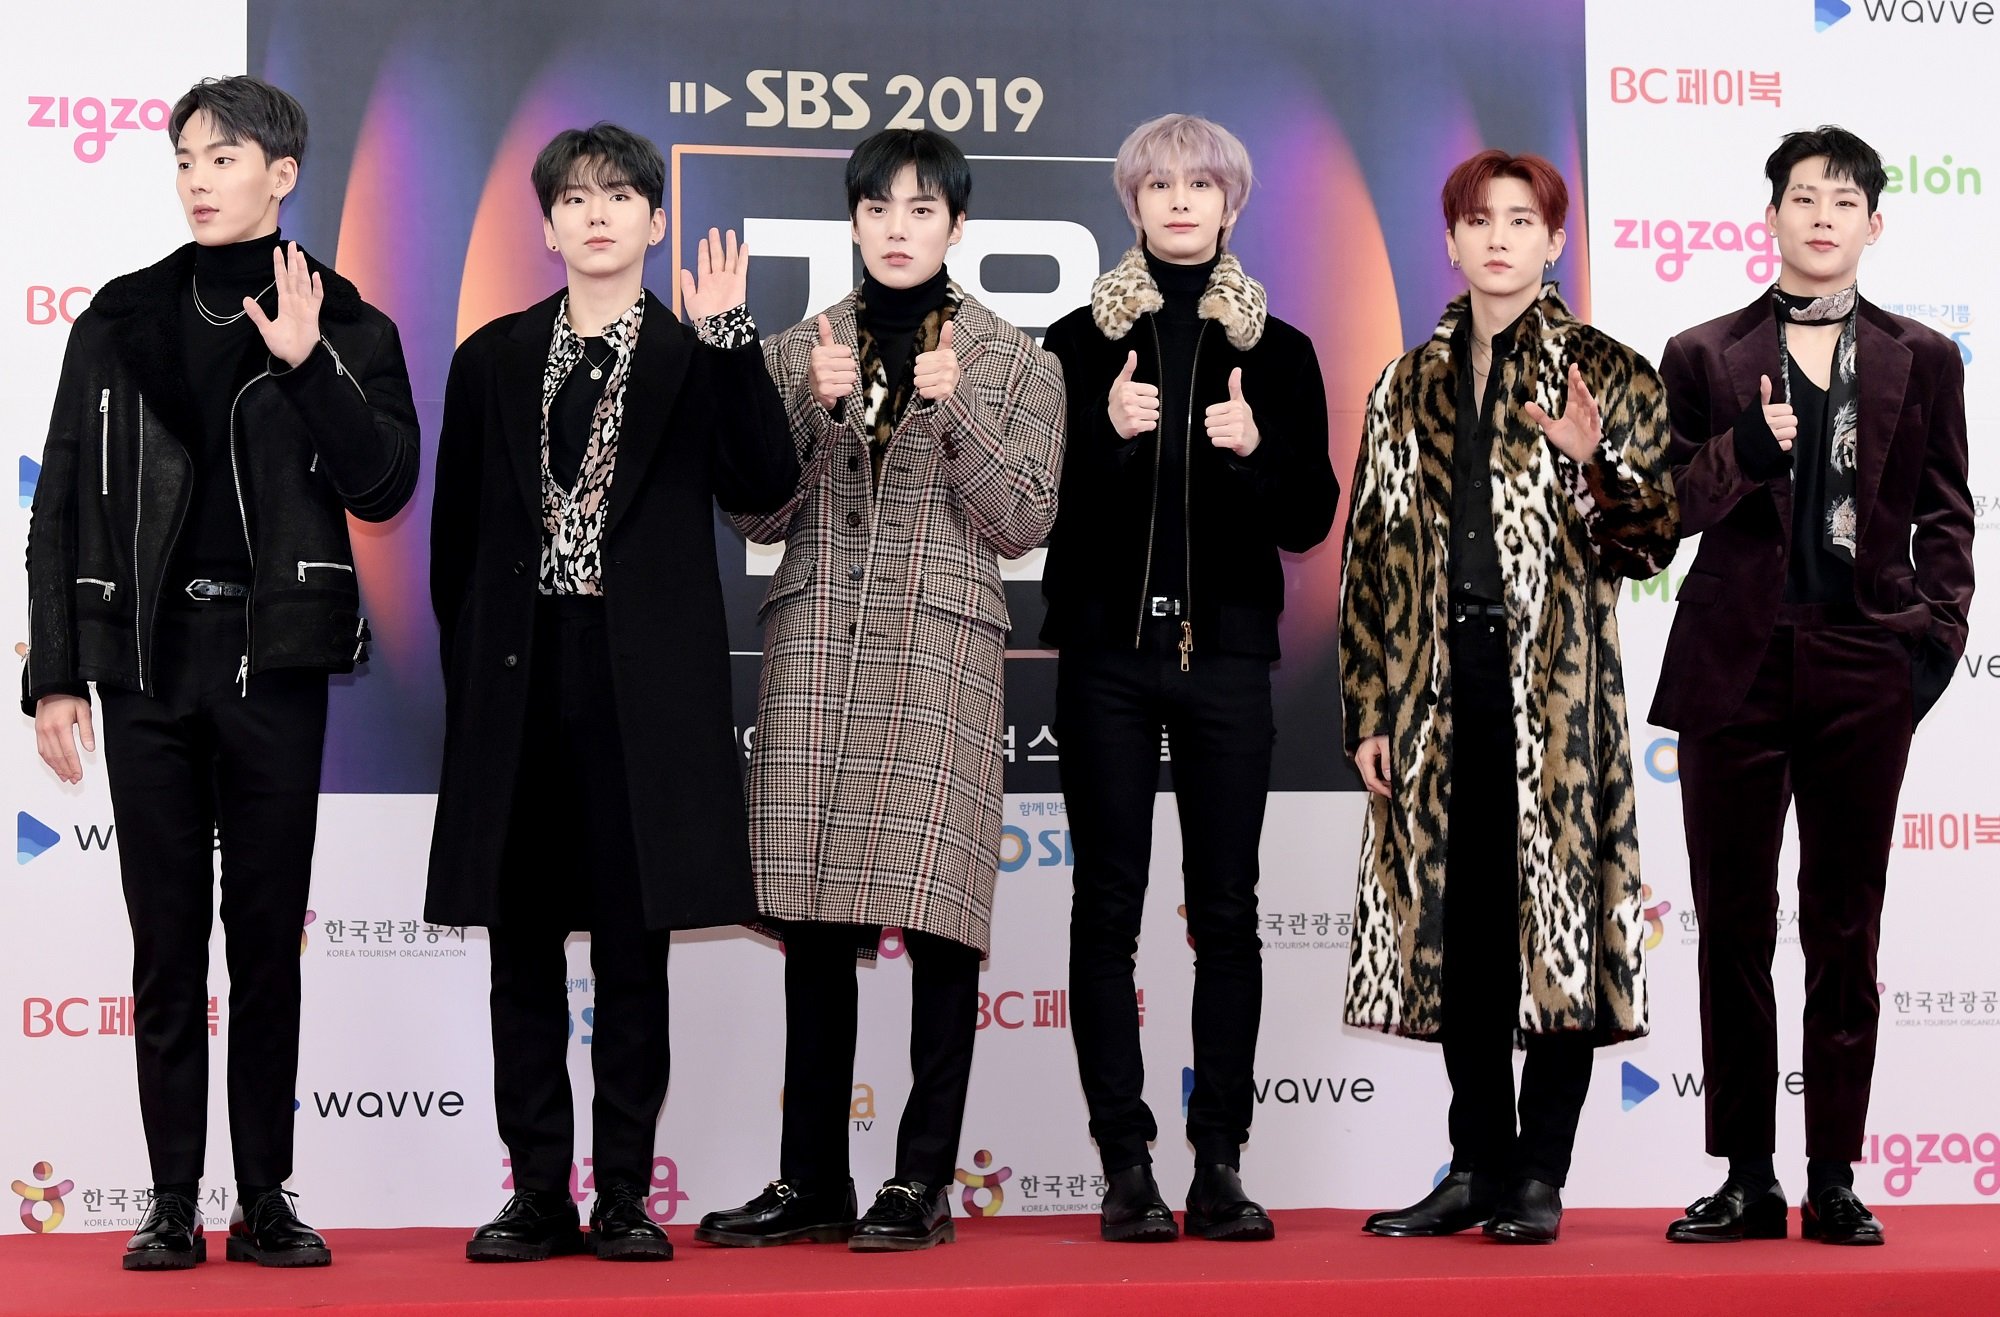 The members of K-pop group Monsta X attend 2019 SBS Gayo Daejeon